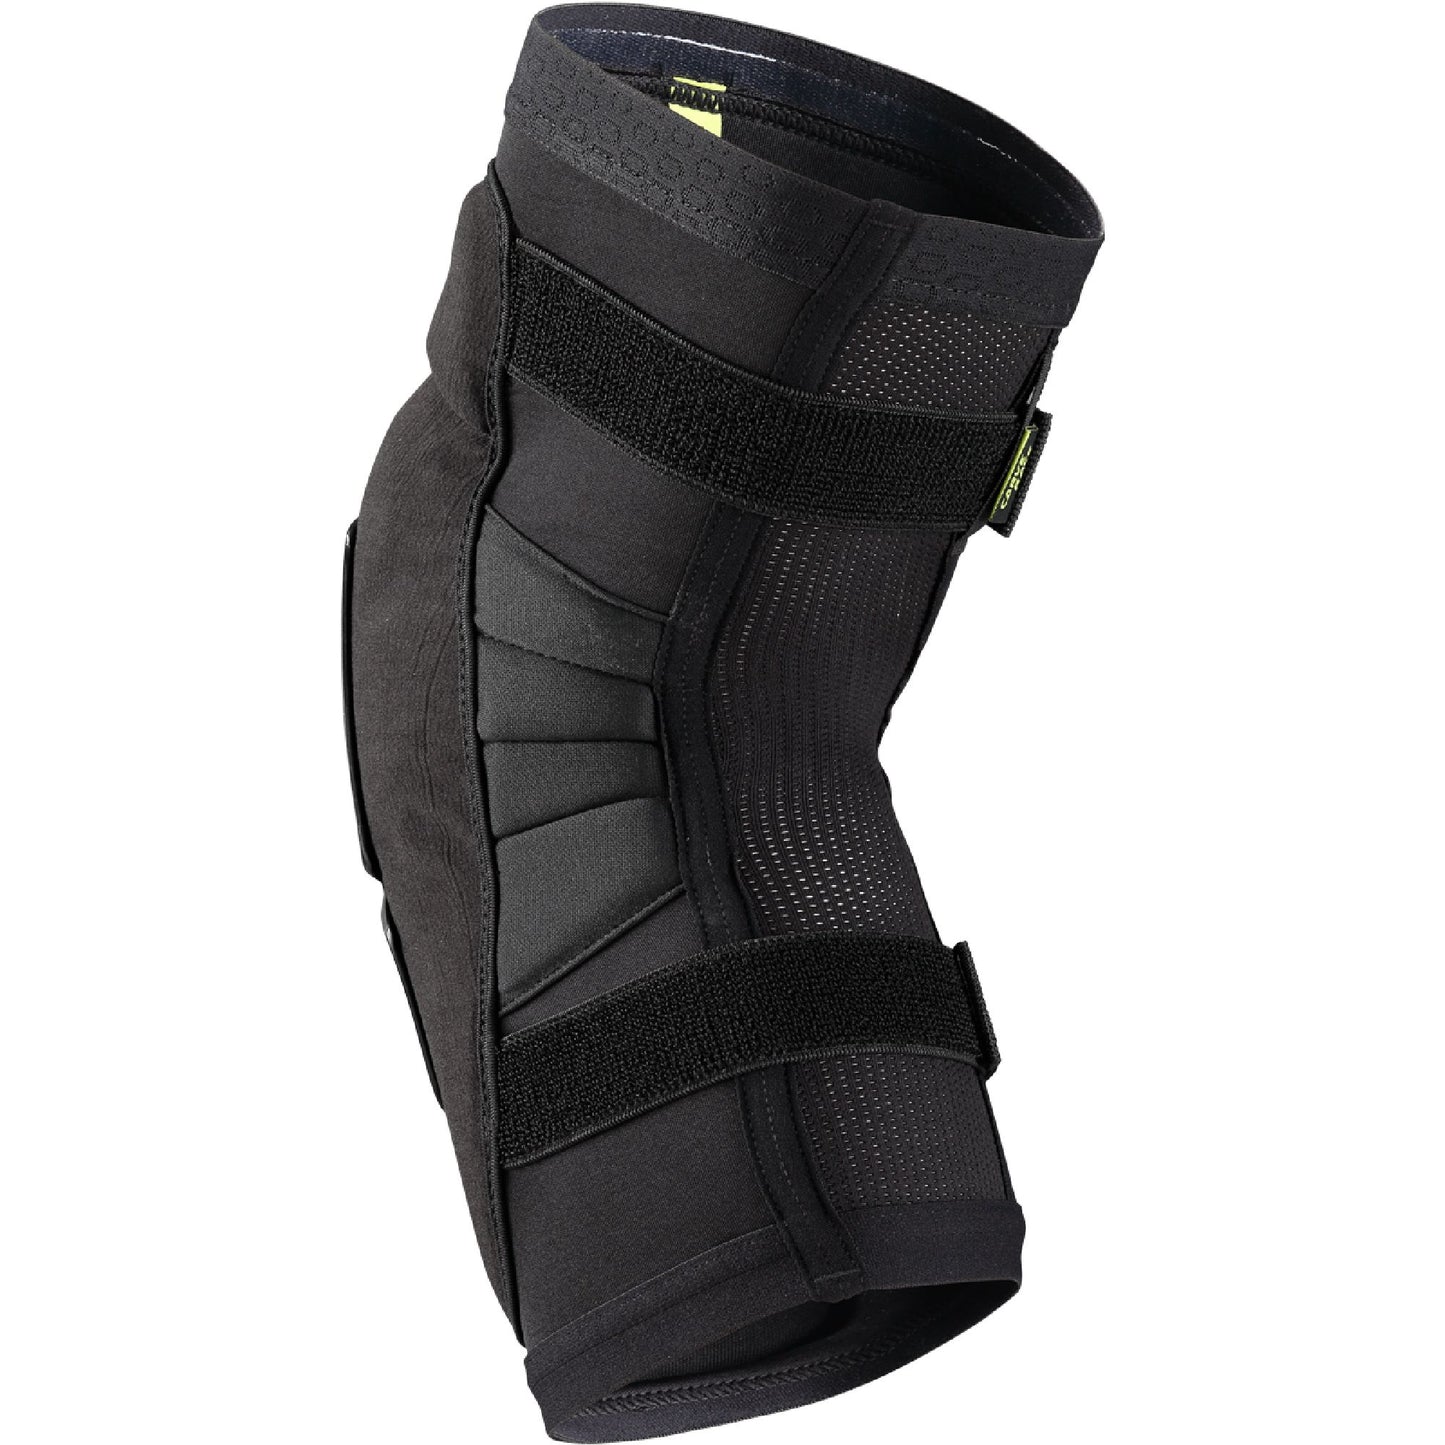 iXS Carve Race Knee Guards Black Protective Gear